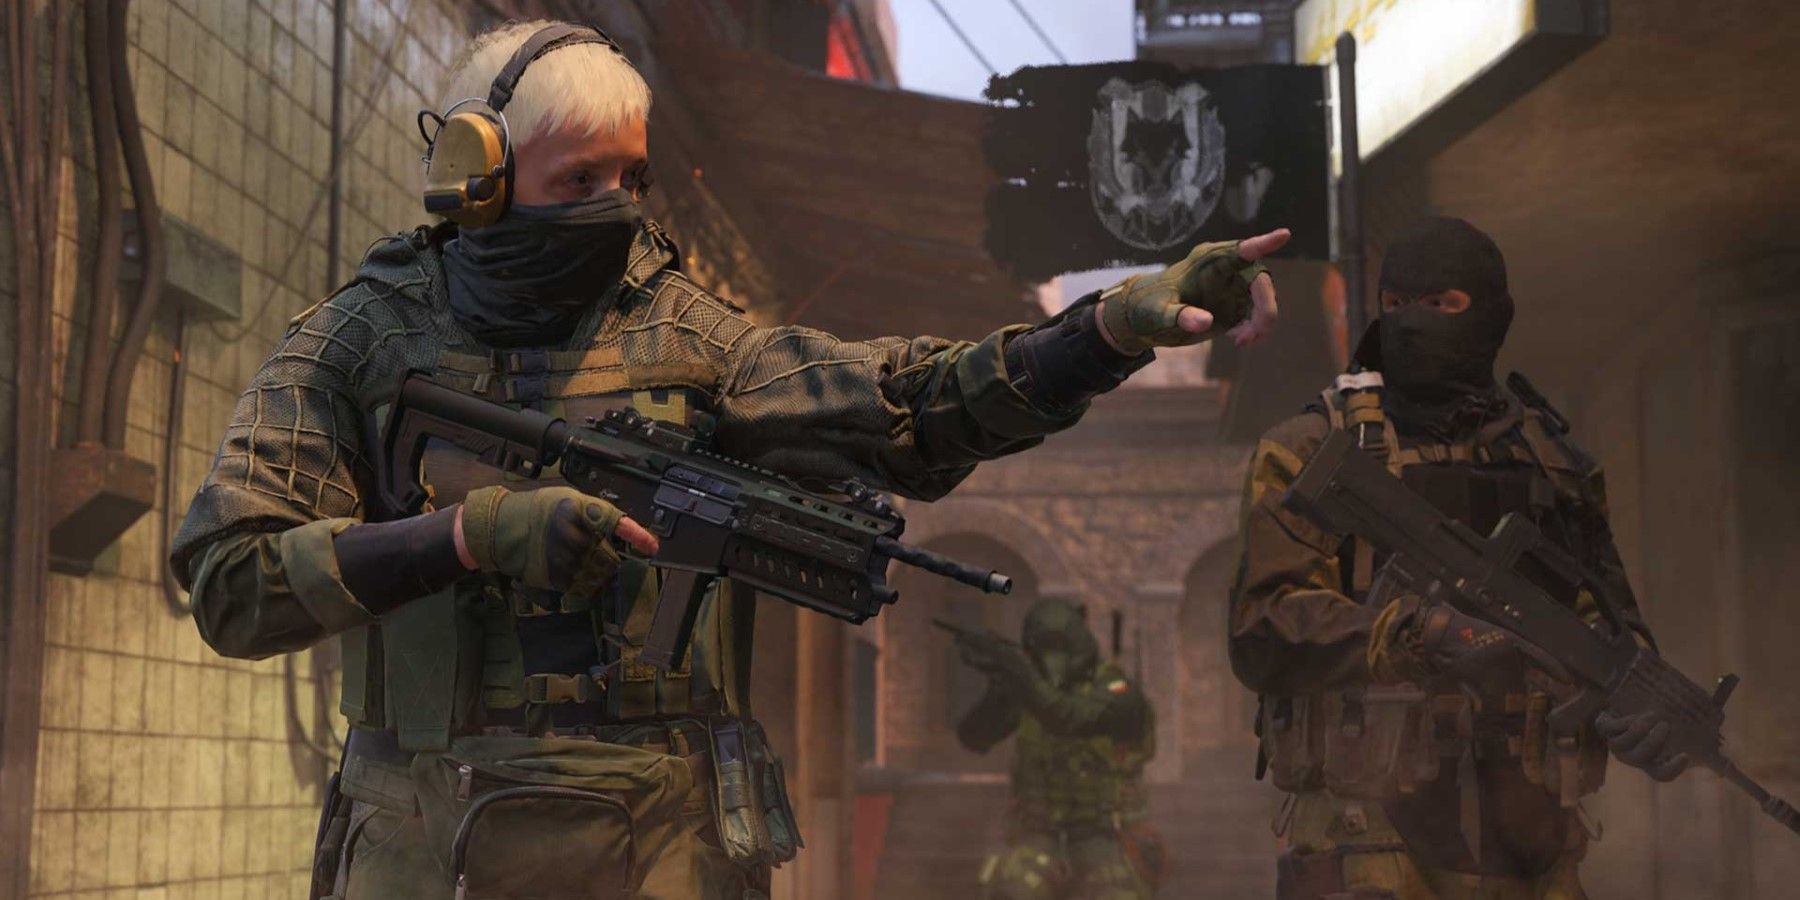 A skin de Call of Duty Modern Warfare 3 tem detalhes perturbadores que impedem os fãs de comprá-la